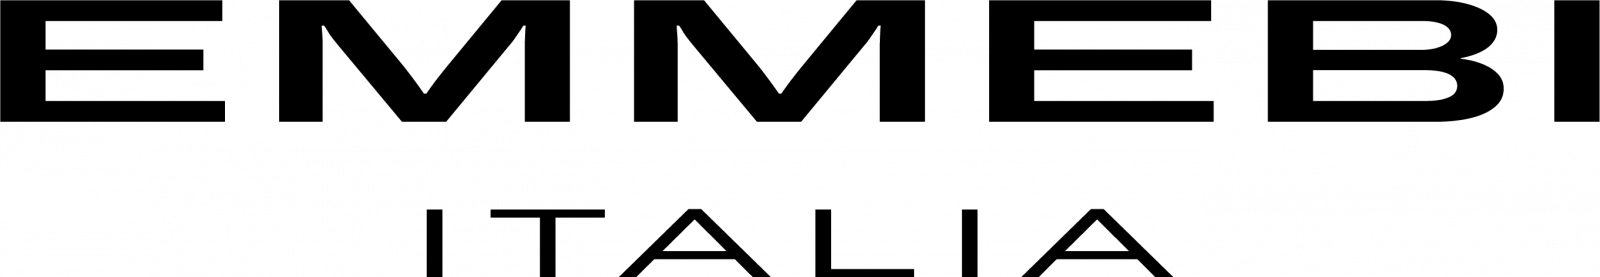 Emmebi logó 